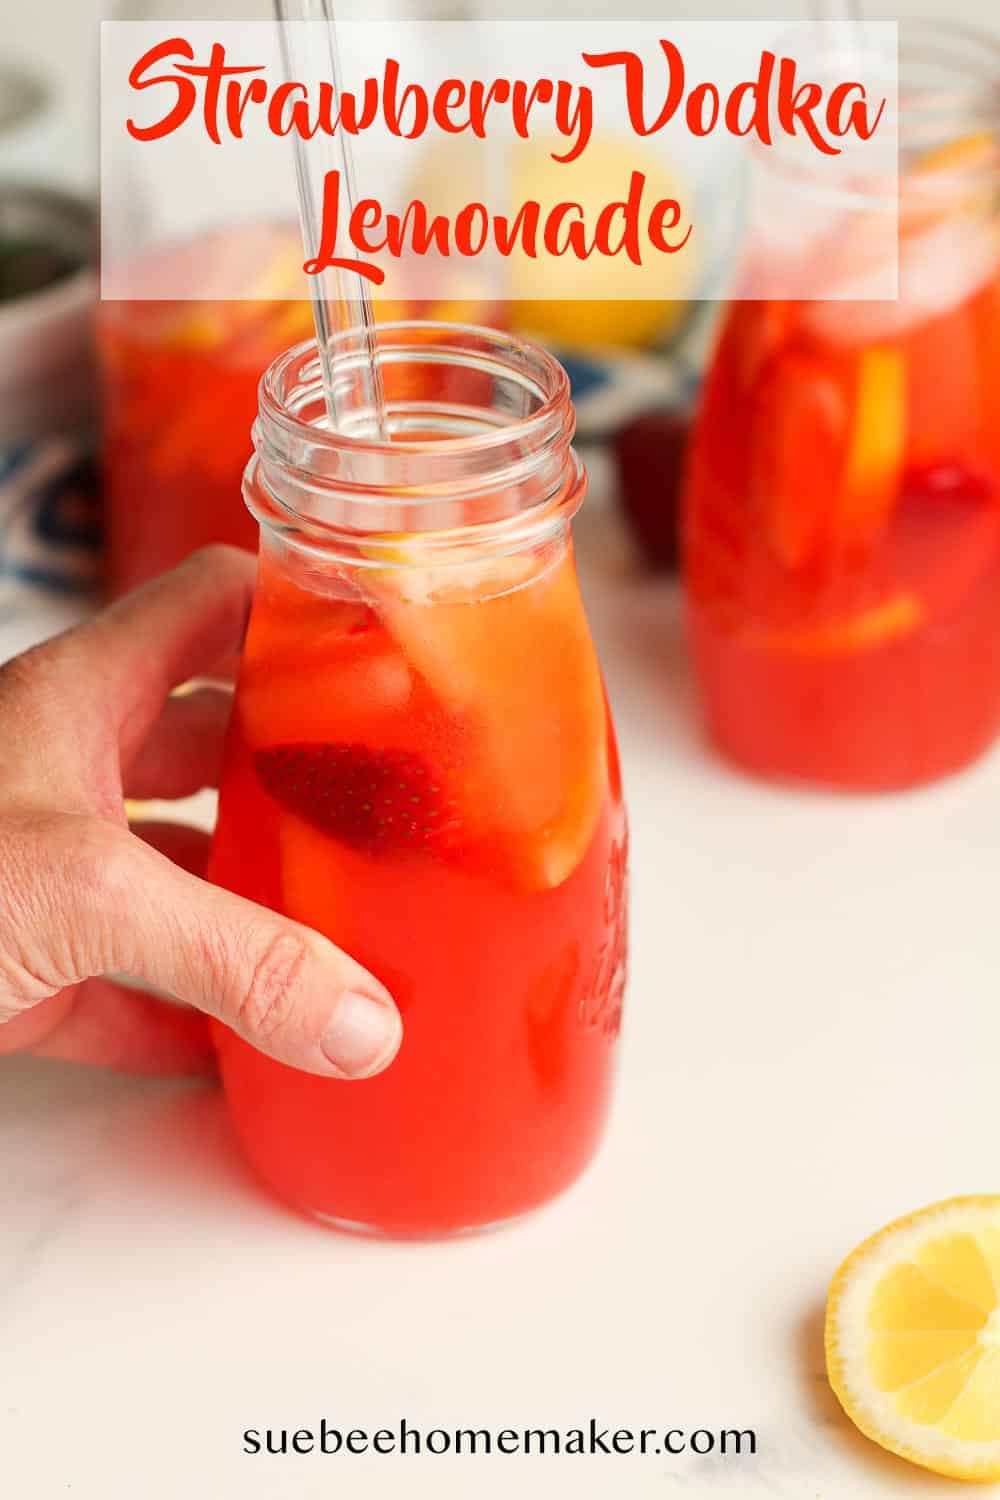 A hand on a jar of strawberry vodka lemonade.